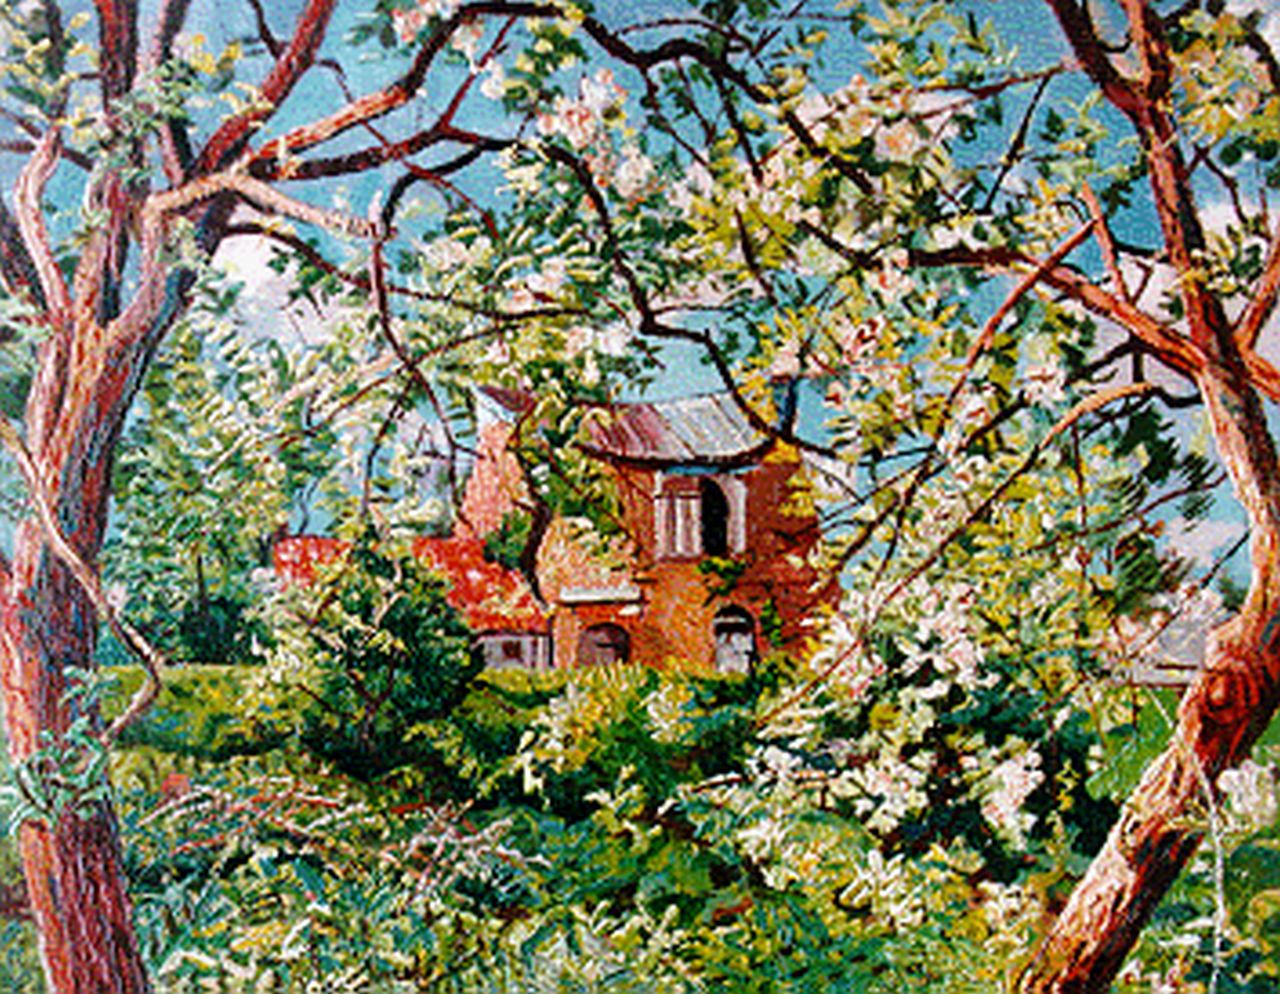 Bieling H.F.  | Hermann Friederich 'Herman' Bieling, Huis in een boomgaard, olieverf op doek 46,3 x 60,4 cm, gesigneerd rechtsonder en gedateerd '48